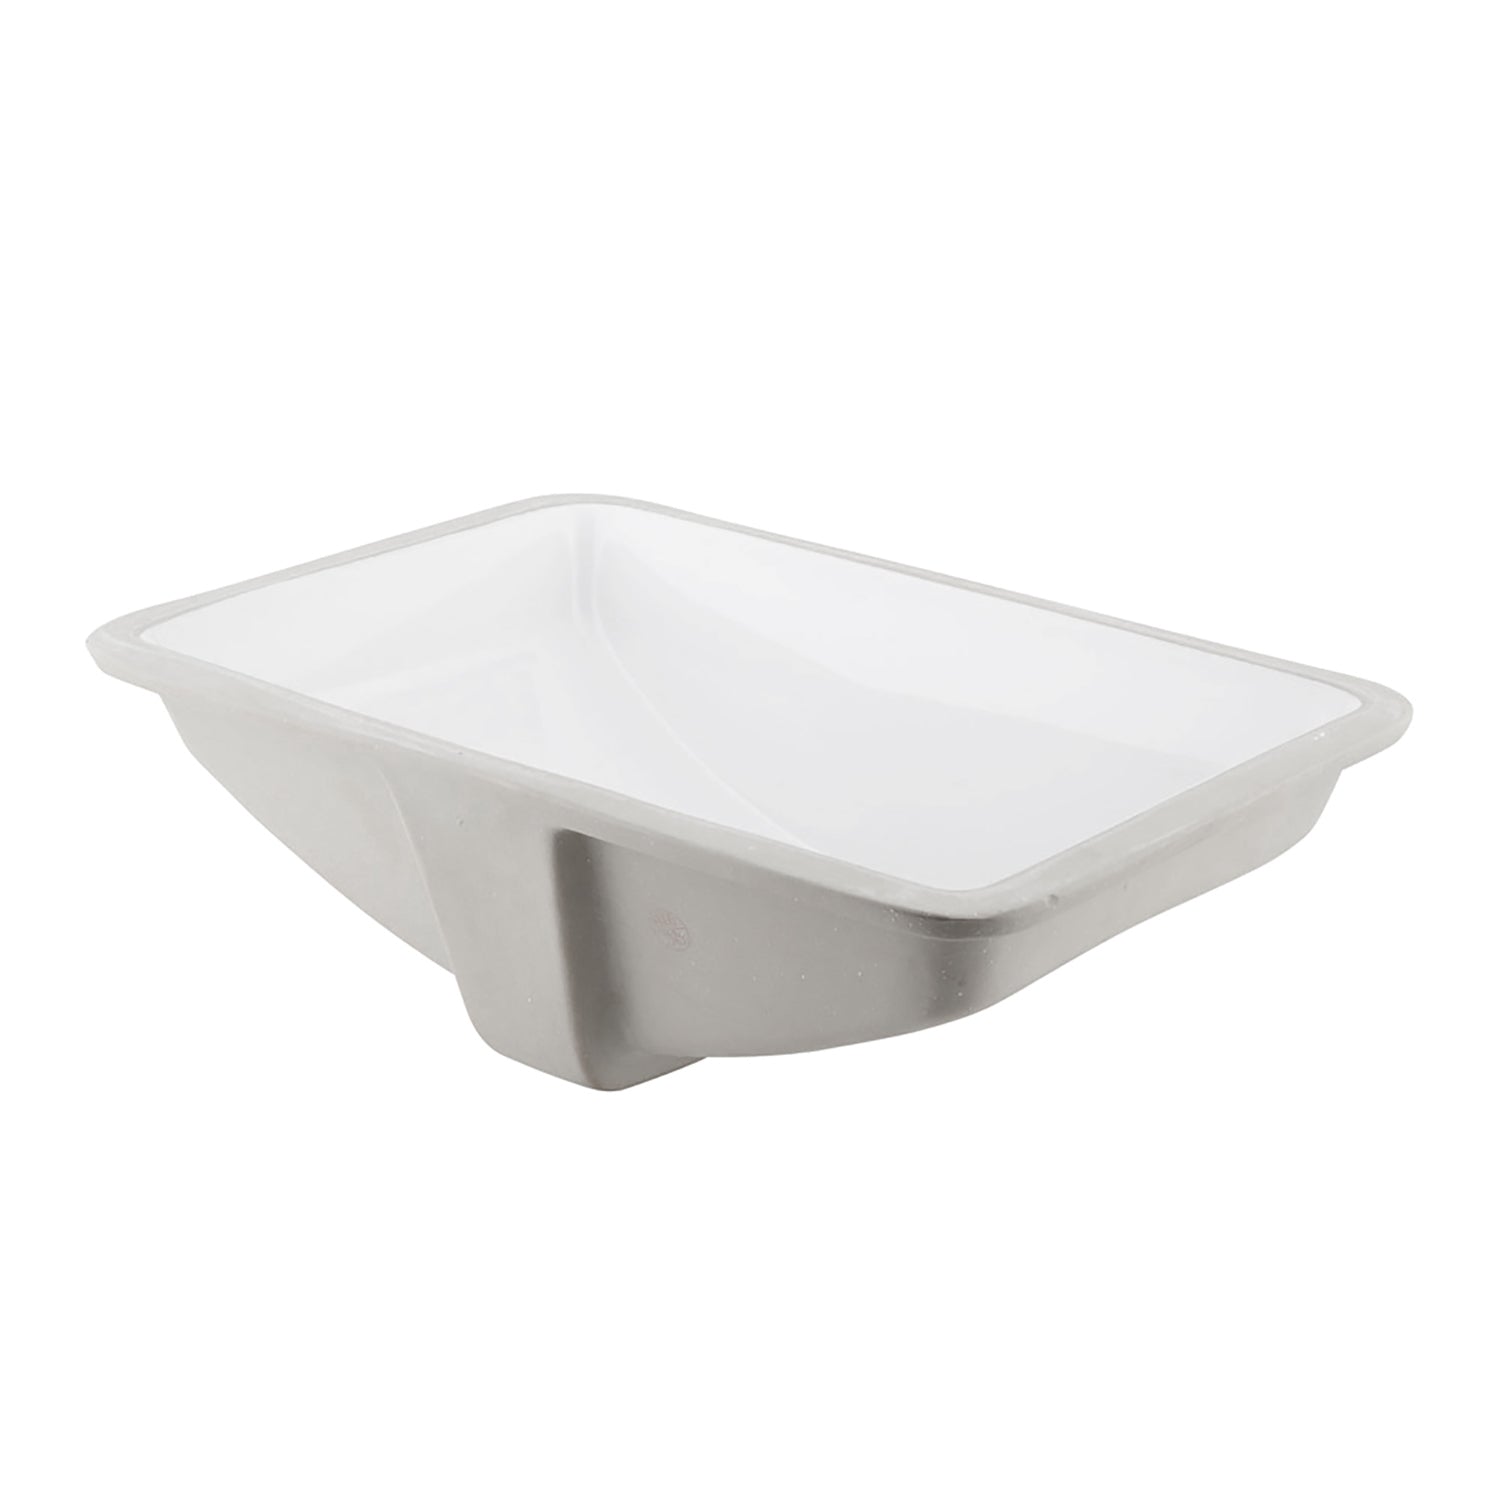 DAX Ceramic Square Single Bowl Undermount Bathroom Sink, White Finish, 22-1/6 x 15-1/2 x 8-5/16 Inches (BSN-202G-W)